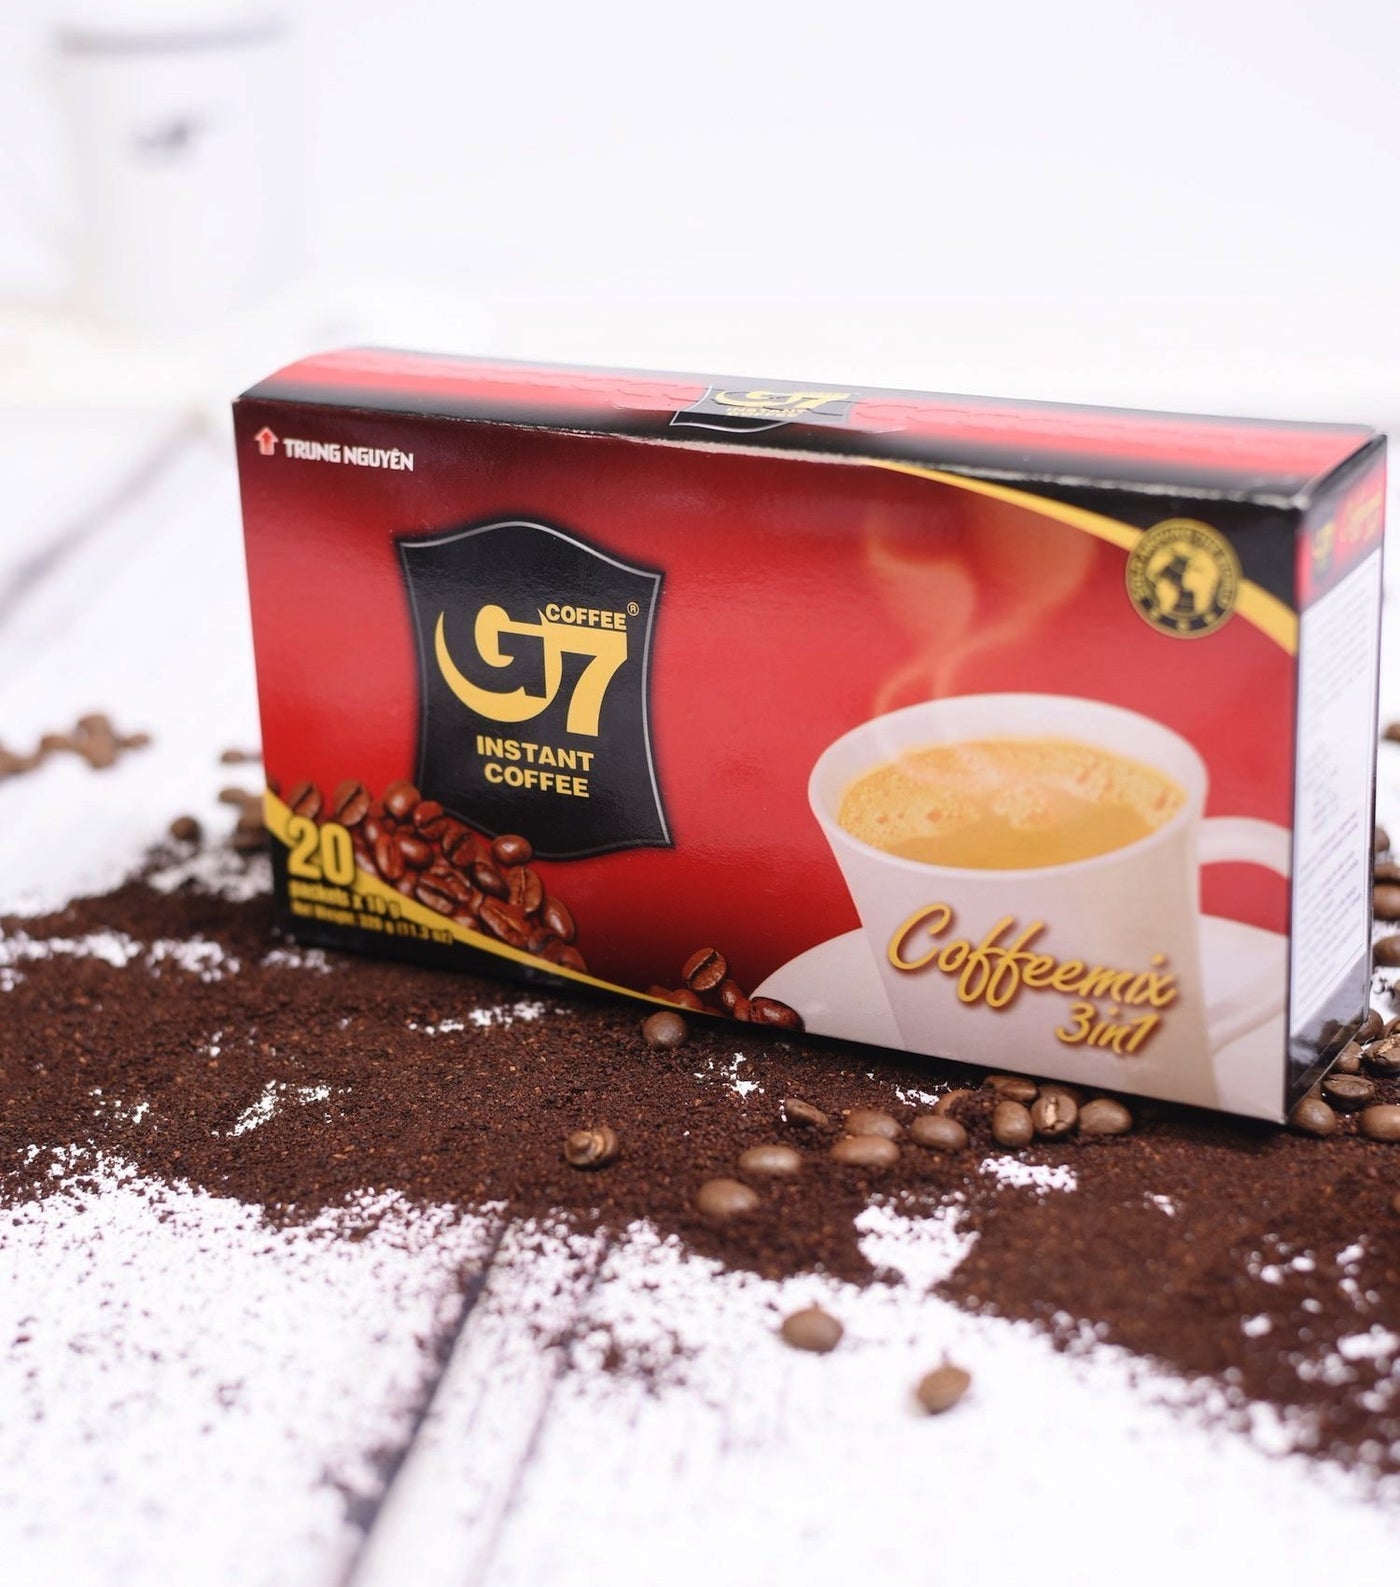 G7 Instant coffee 3in1 - 20 servings